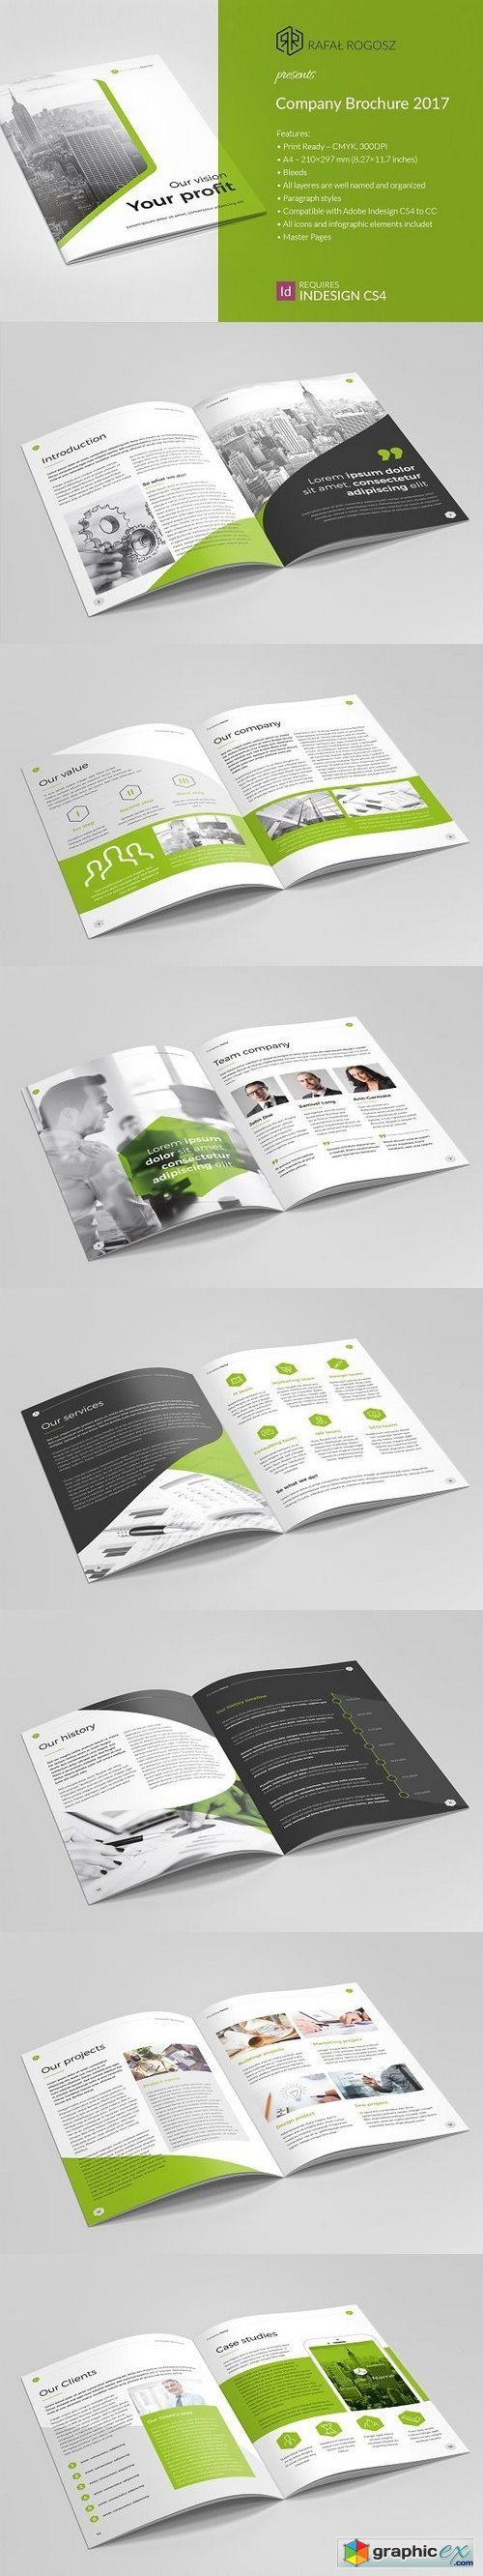 Company Brochure 2017